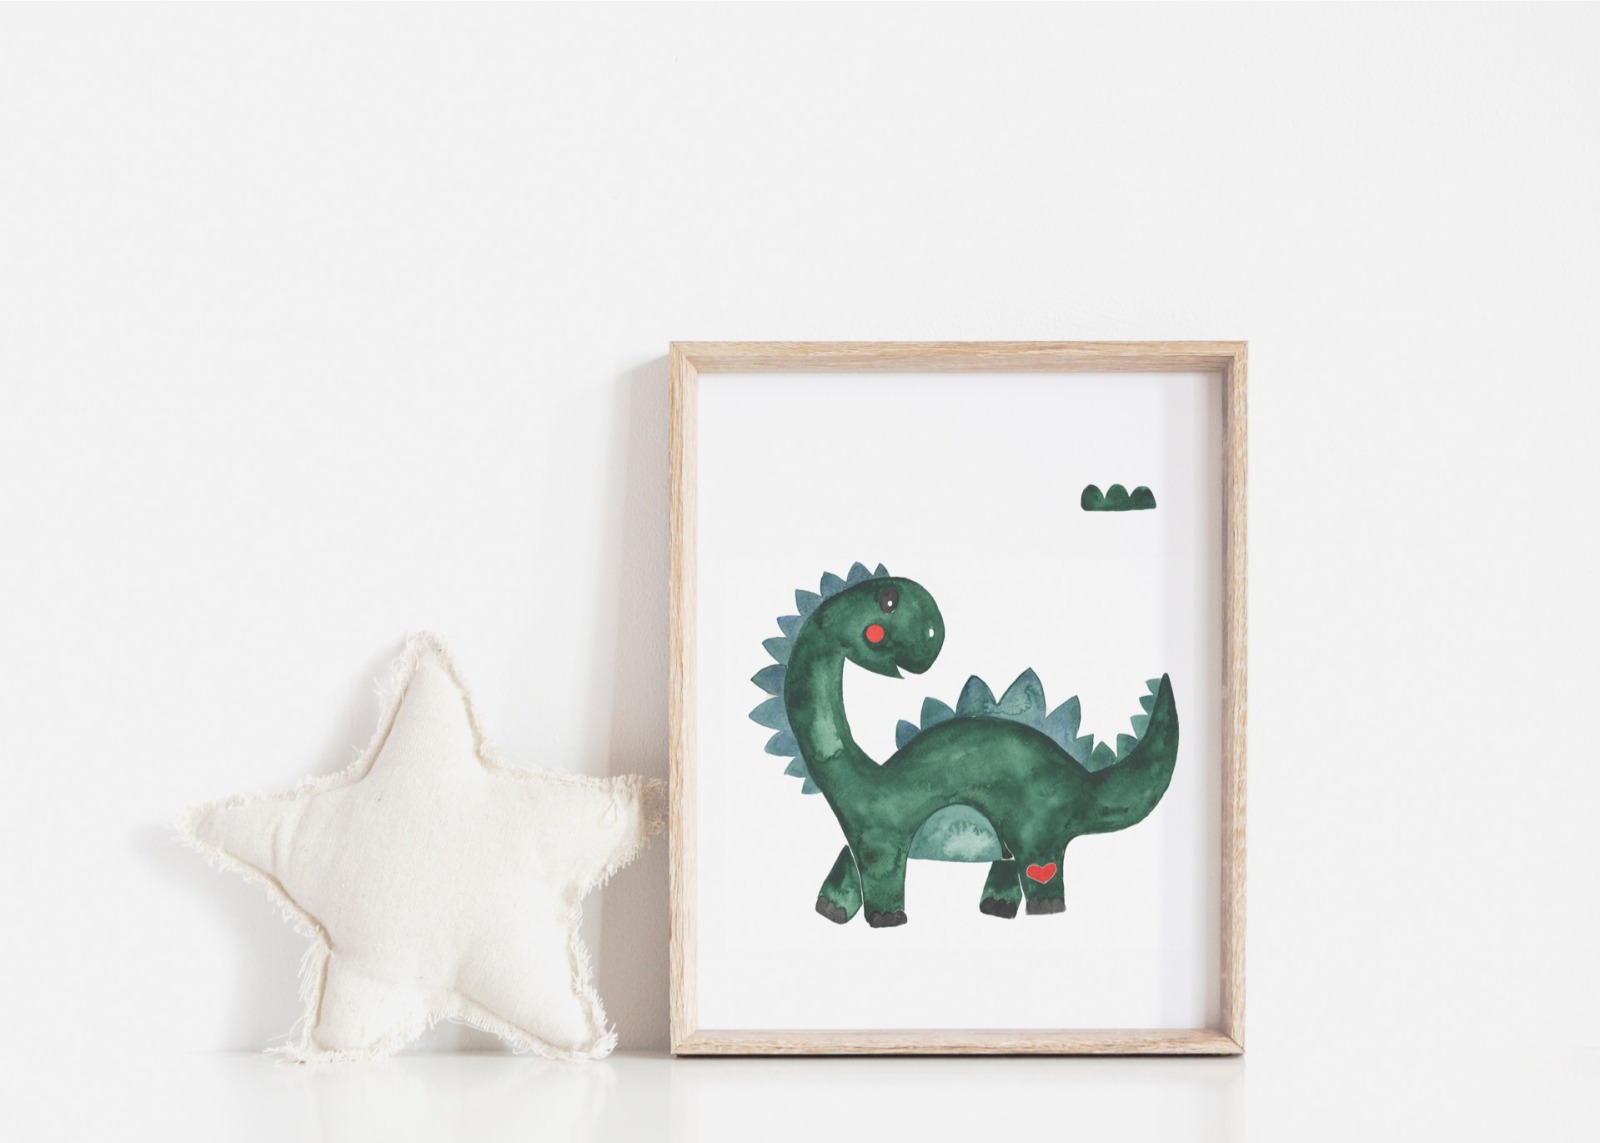 Kinderzimmer Poster Dinosaurier 3